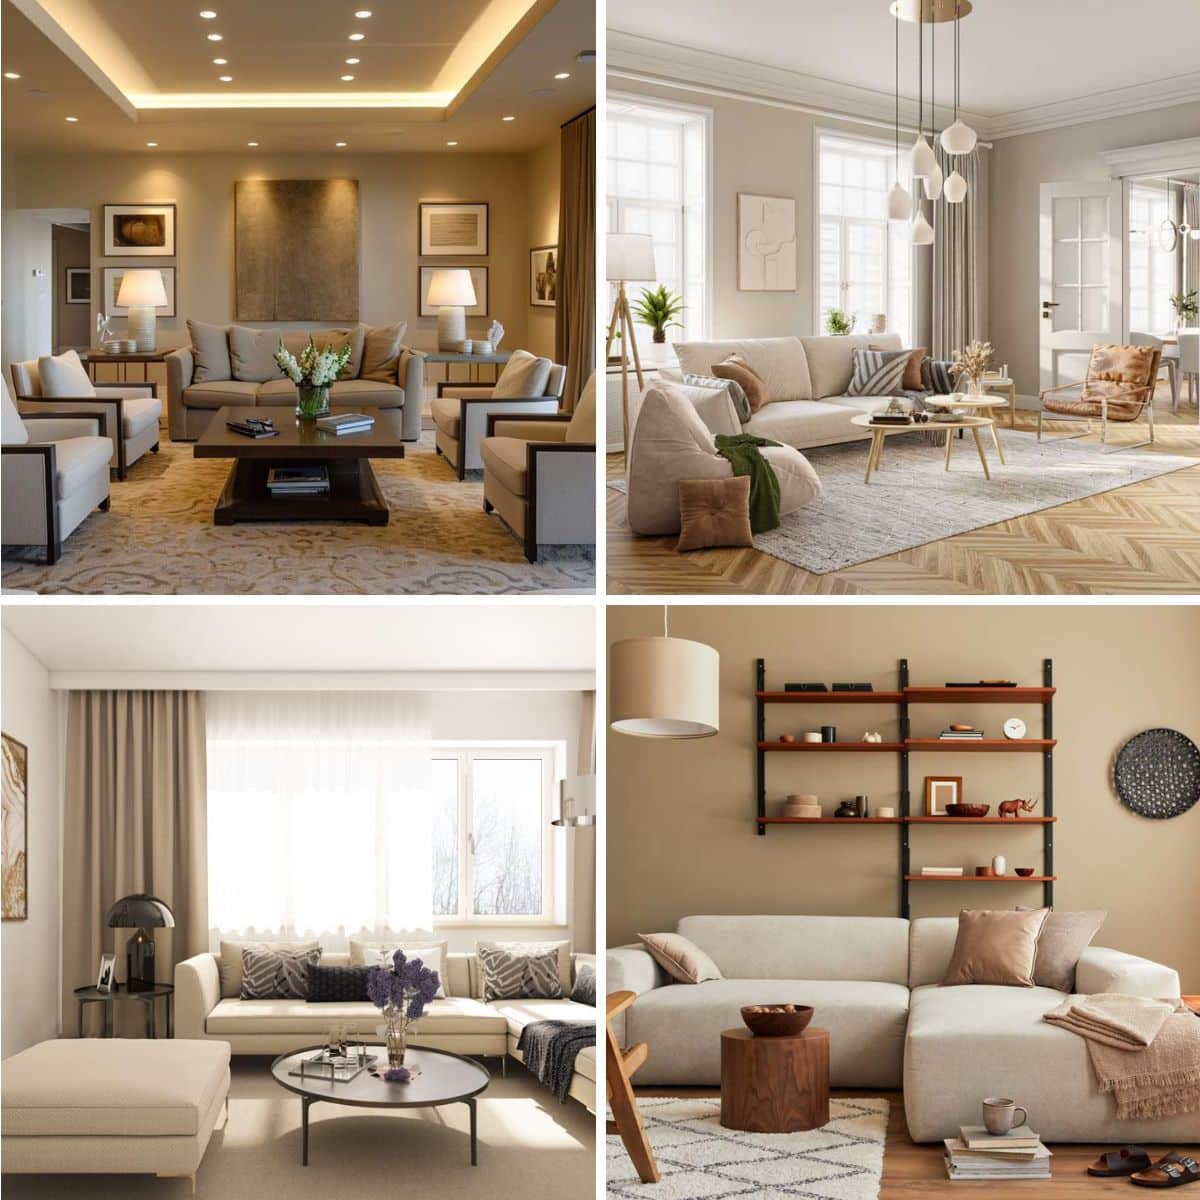 beige interior design with furniture pieces